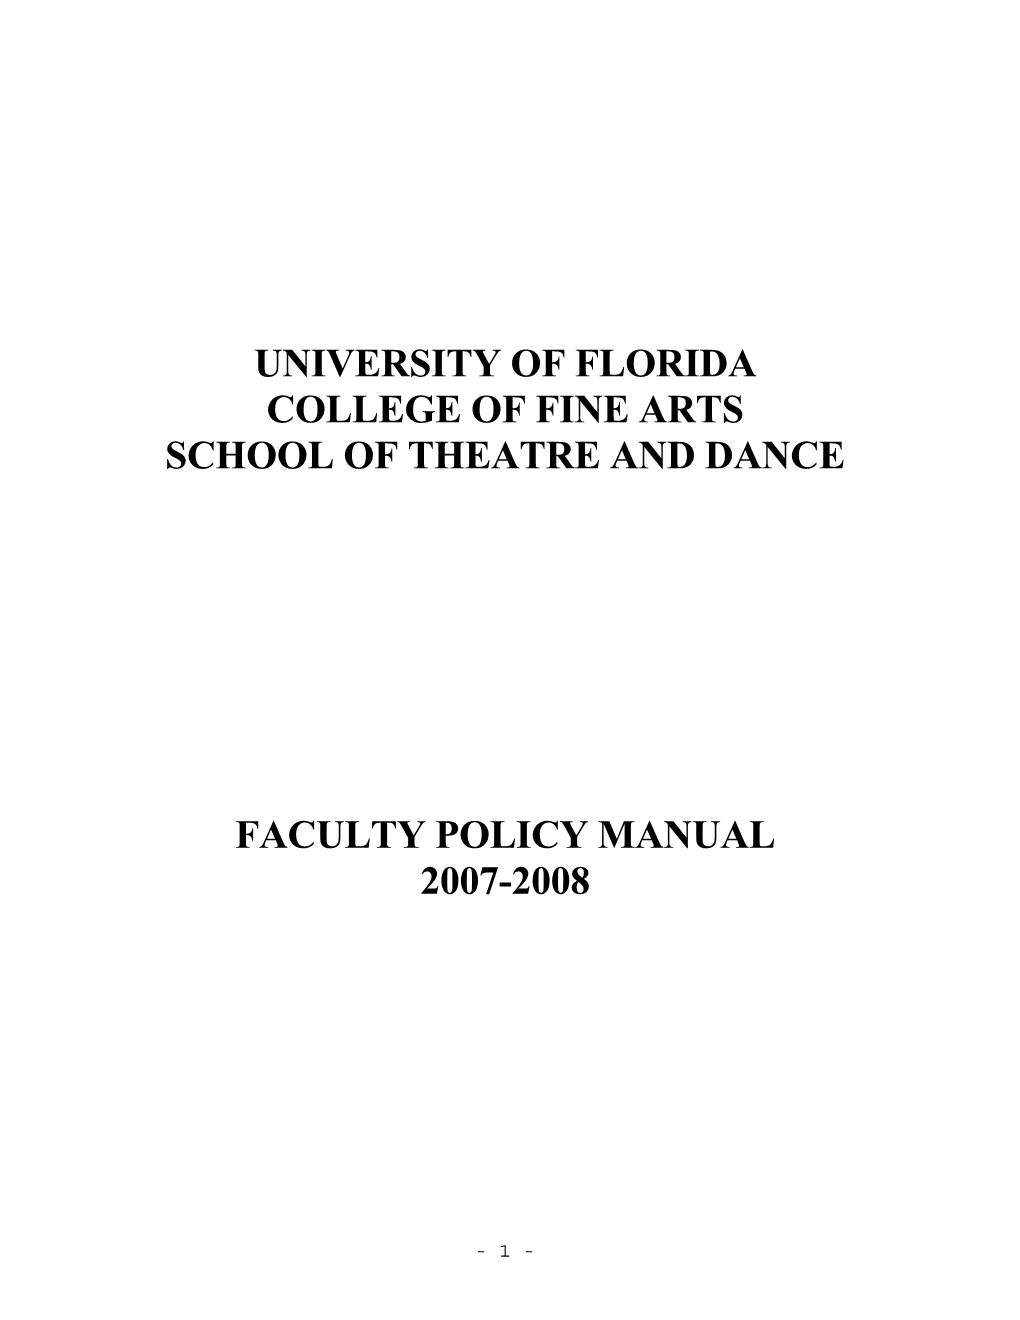 University of Florida College of Fine Arts School of Theatre and Dance